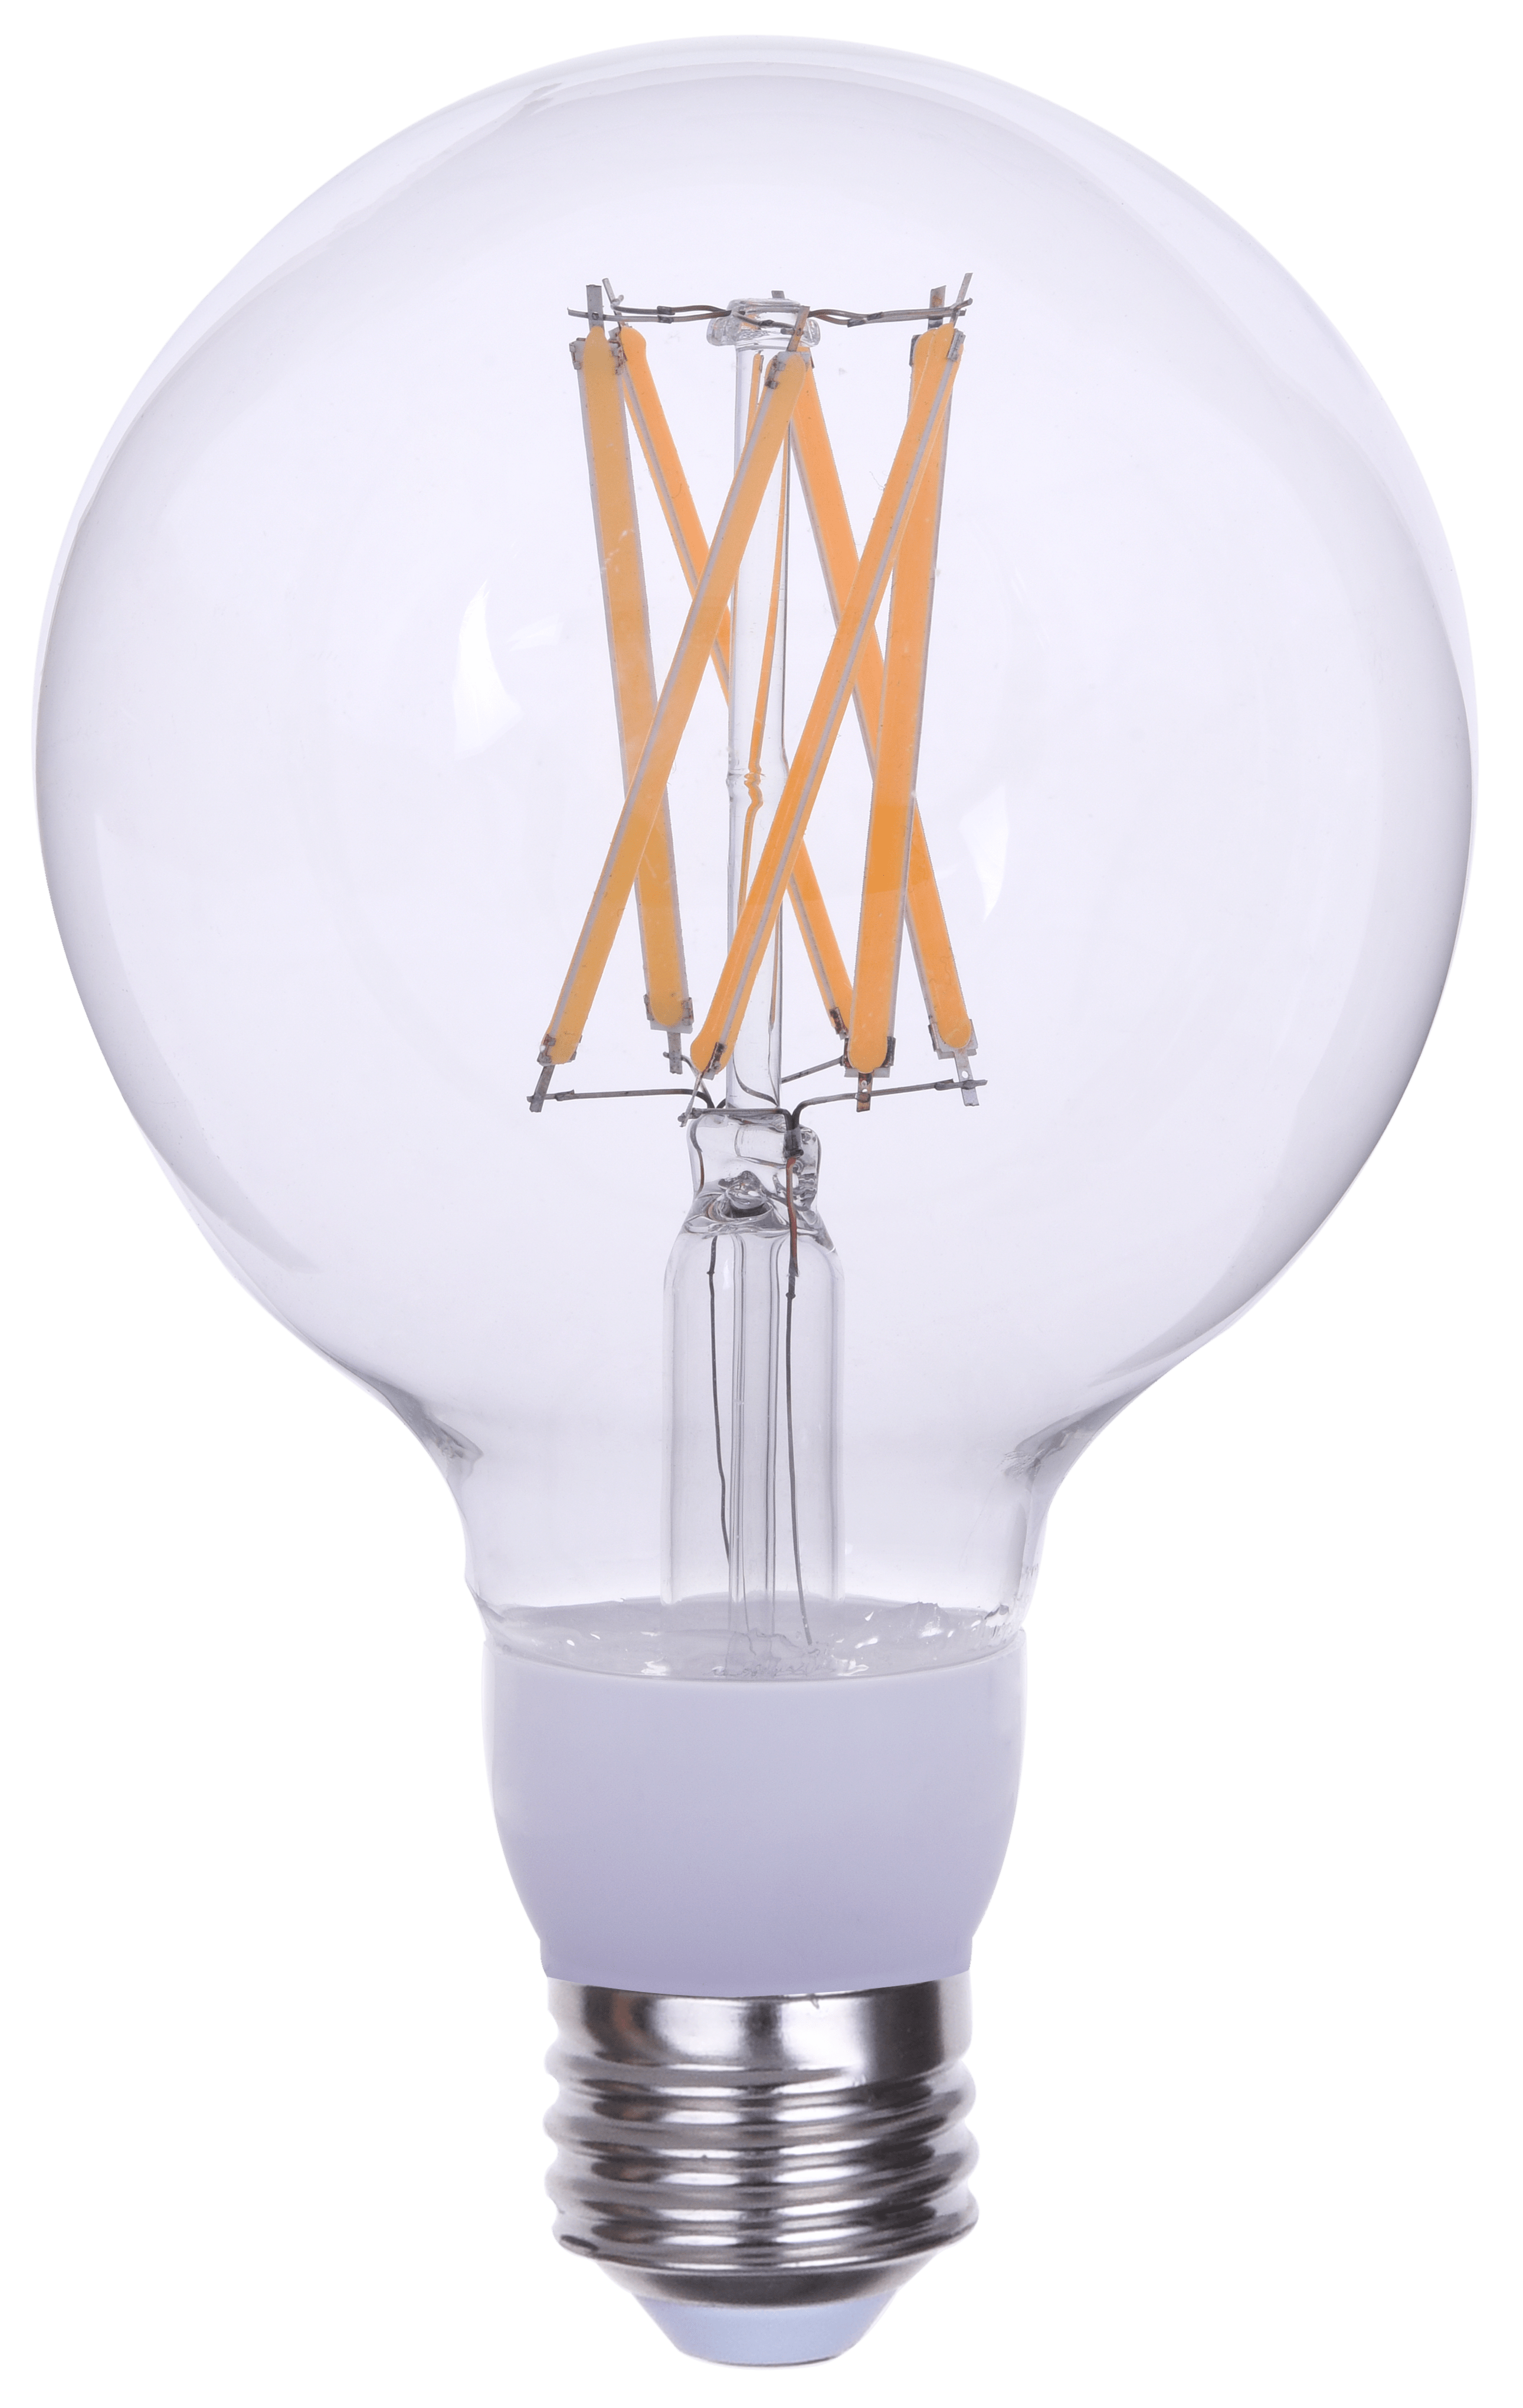 G30 Edison Style 1600 Lumens Medium E26 Base LED Light Bulb Dimmable Warm White 3000k Goodlite G-20128 Filament 100 Watt Equivalent Clear